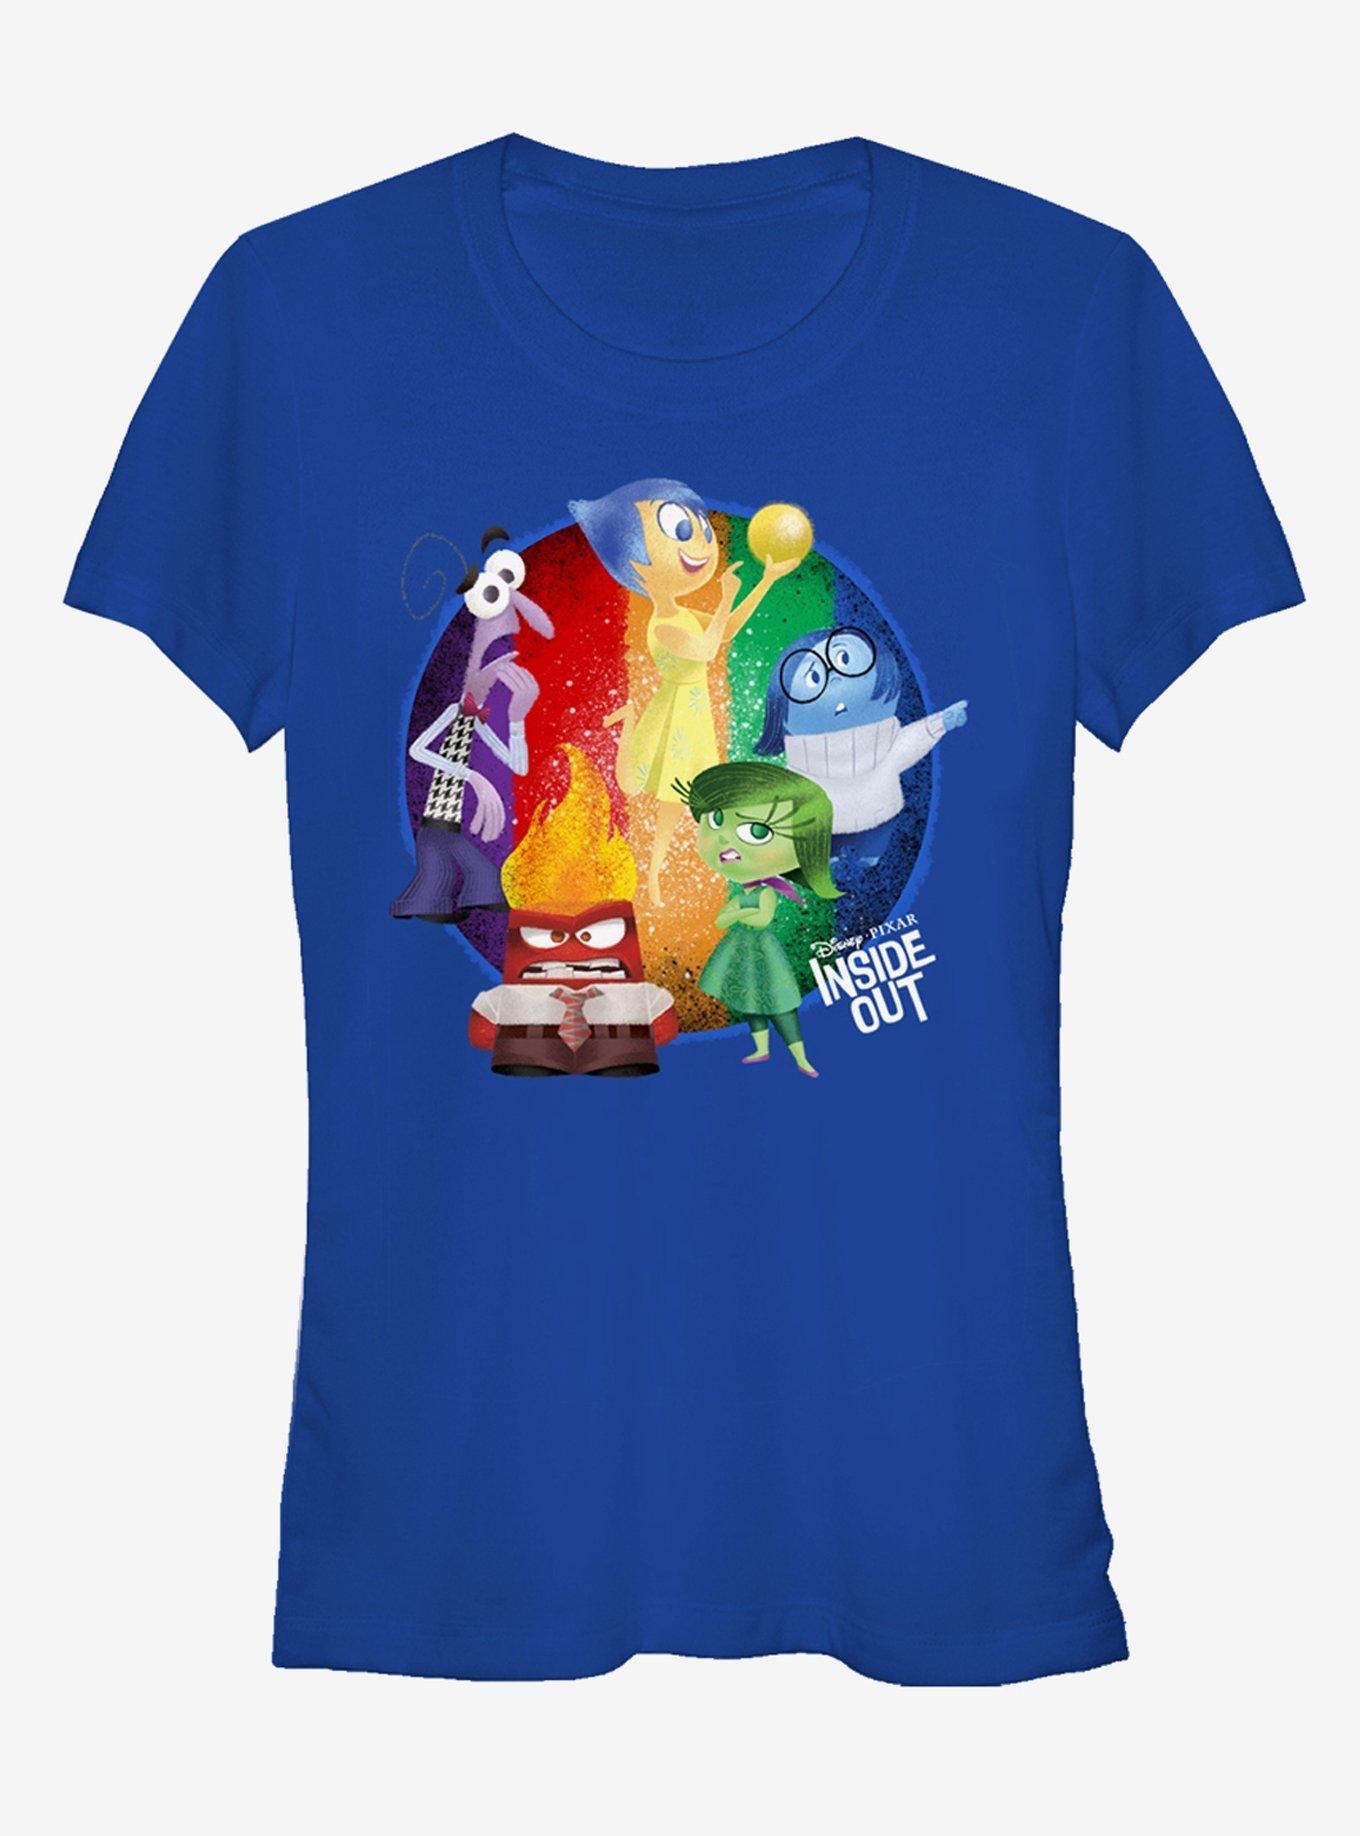 Disney Pixar Inside Out Every Day Emotions Sweatshirt Sweatshirt